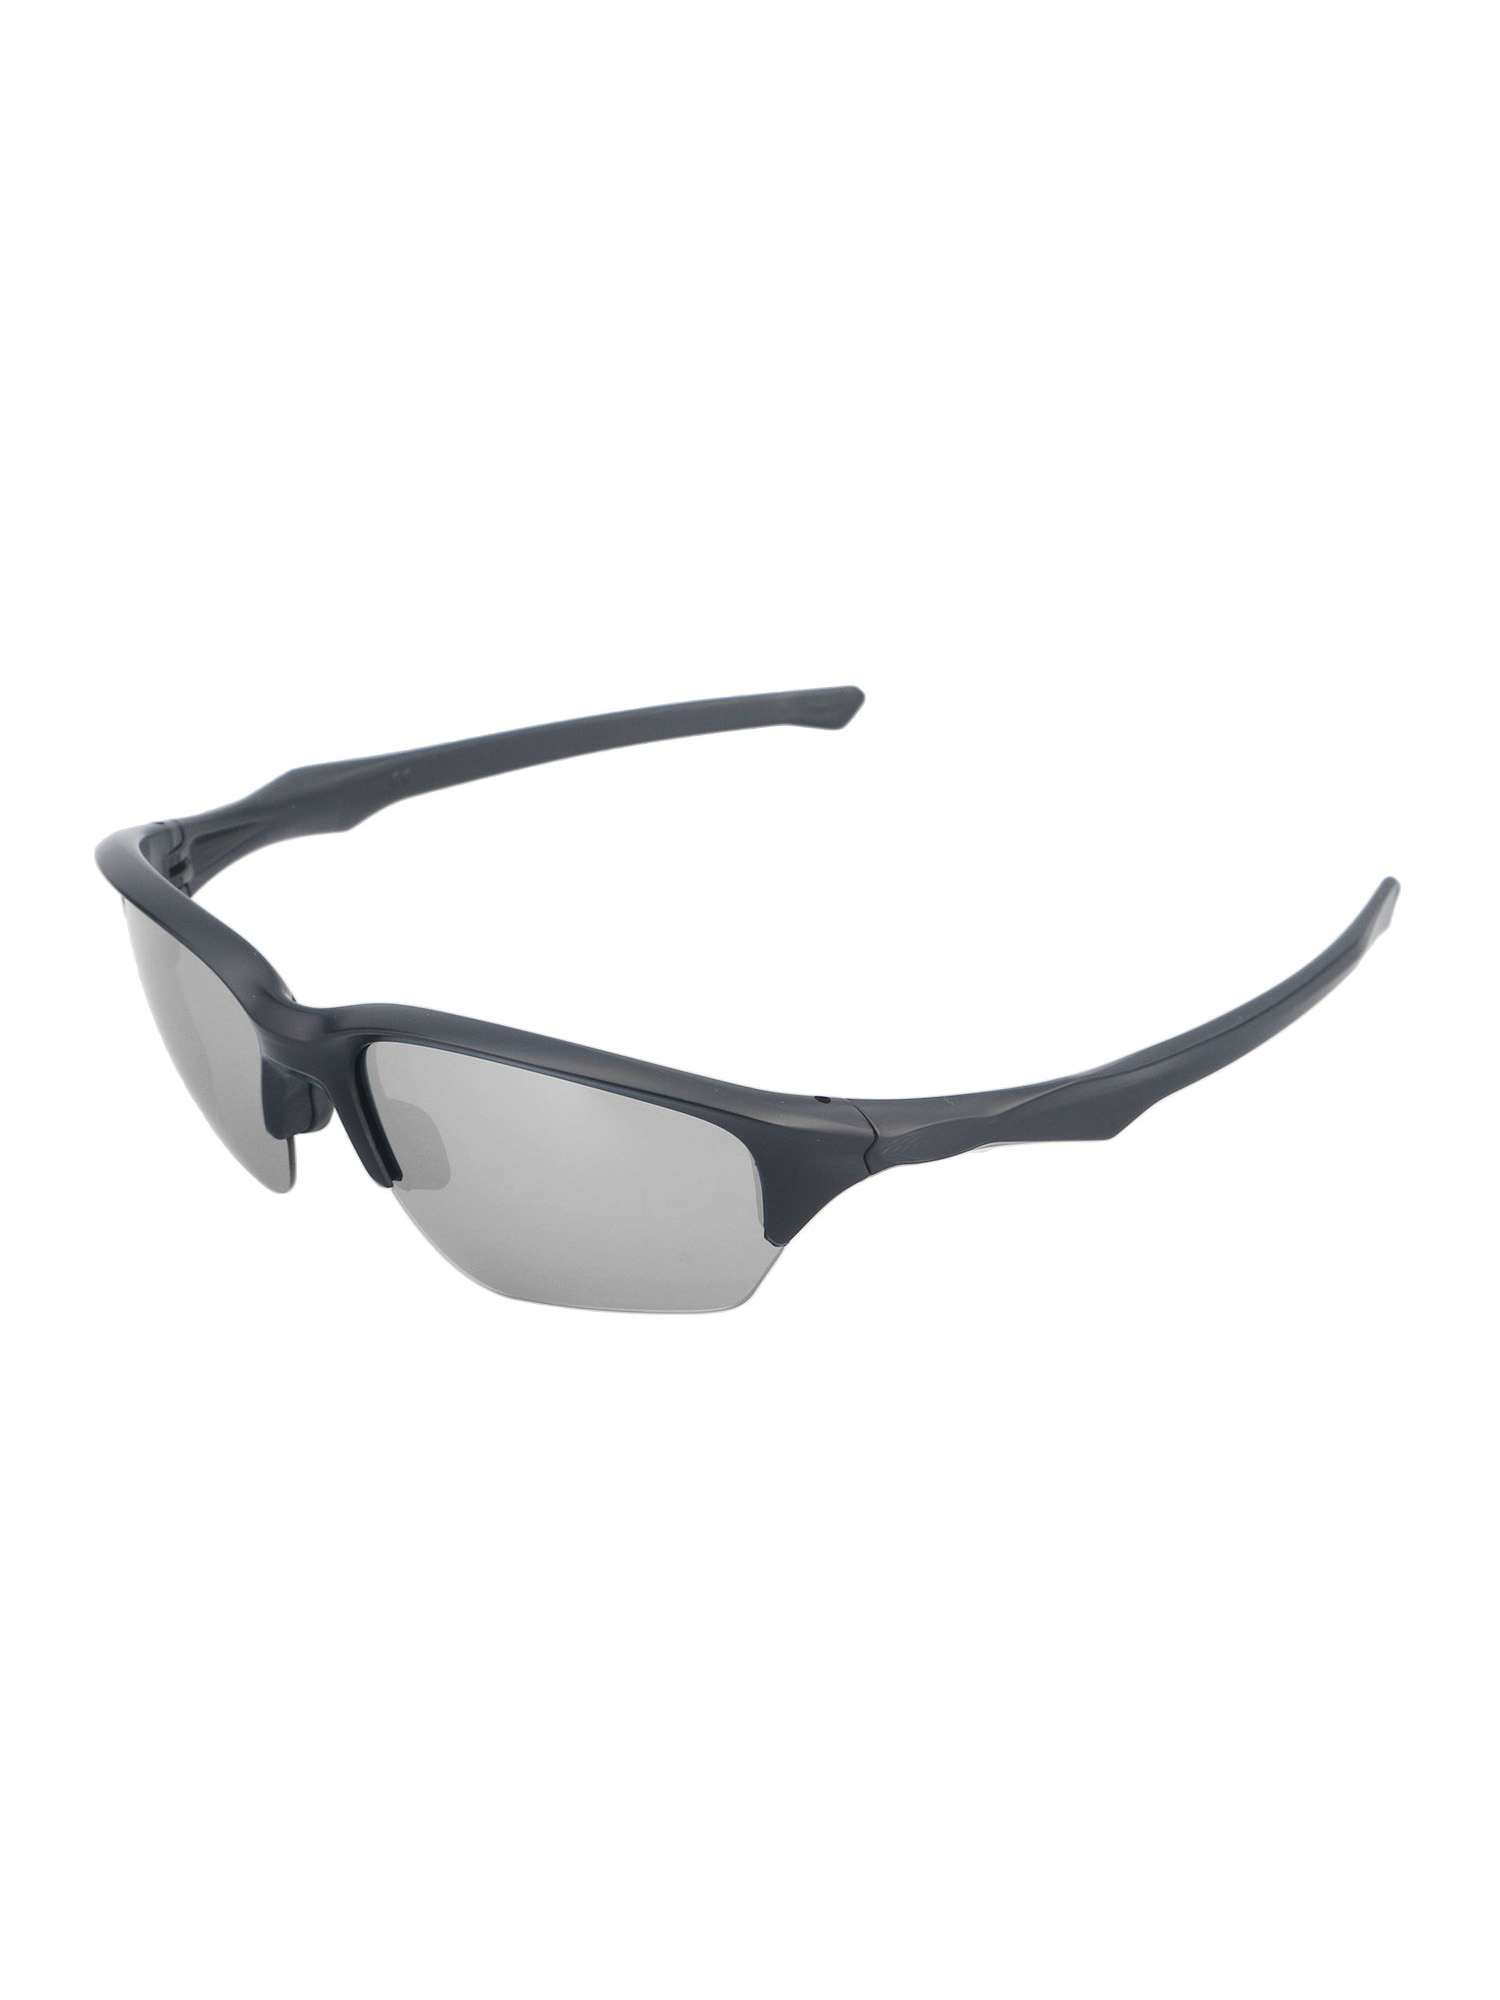 Walleva Titanium Polarized Replacement Lenses for Oakley Flak Beta Sunglasses - image 4 of 6